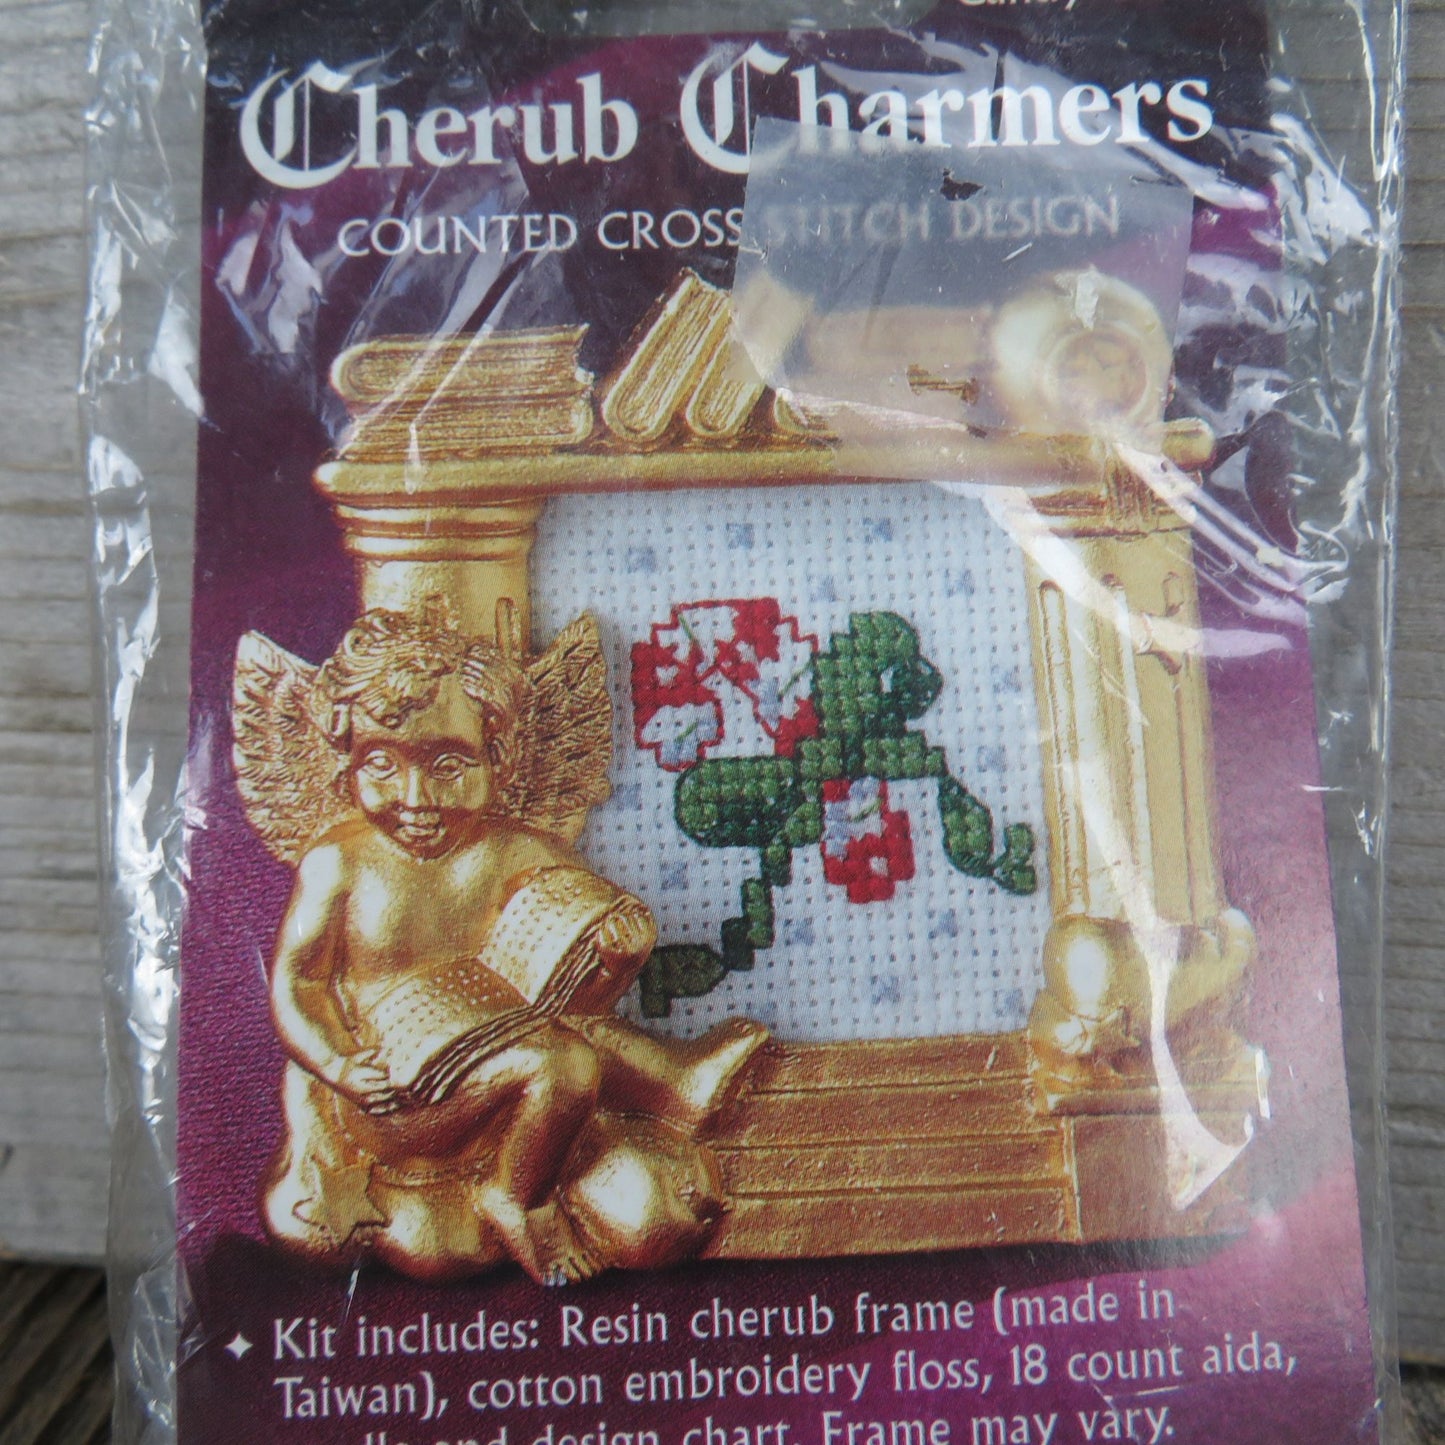 Bucilla Counted Cross Stitch Kit Candy Cane Cherub Charmers Christmas Framed 33643